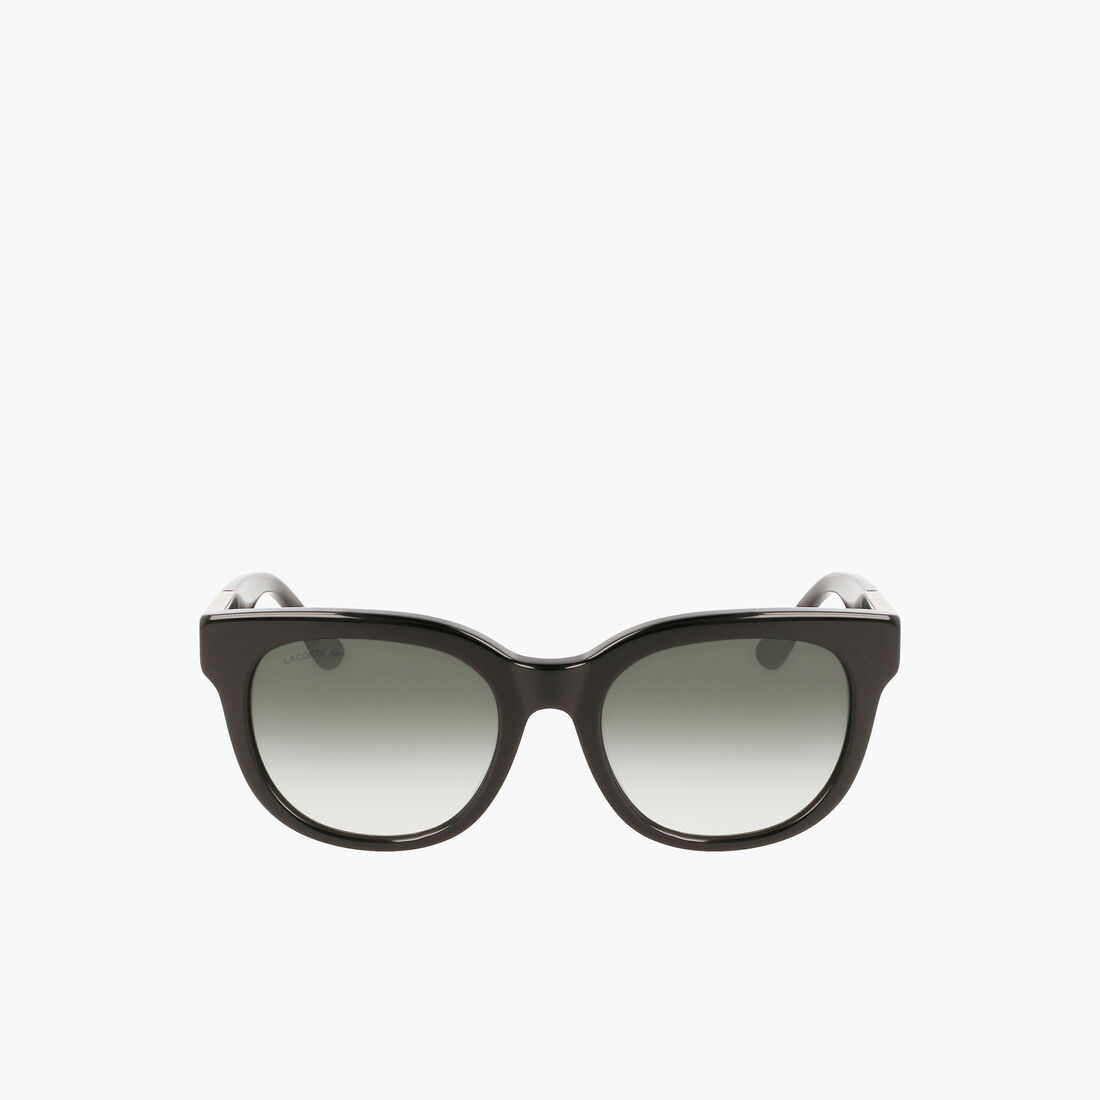 Women's Oval Acetate Croco Skin Sunglasses - L971S-001